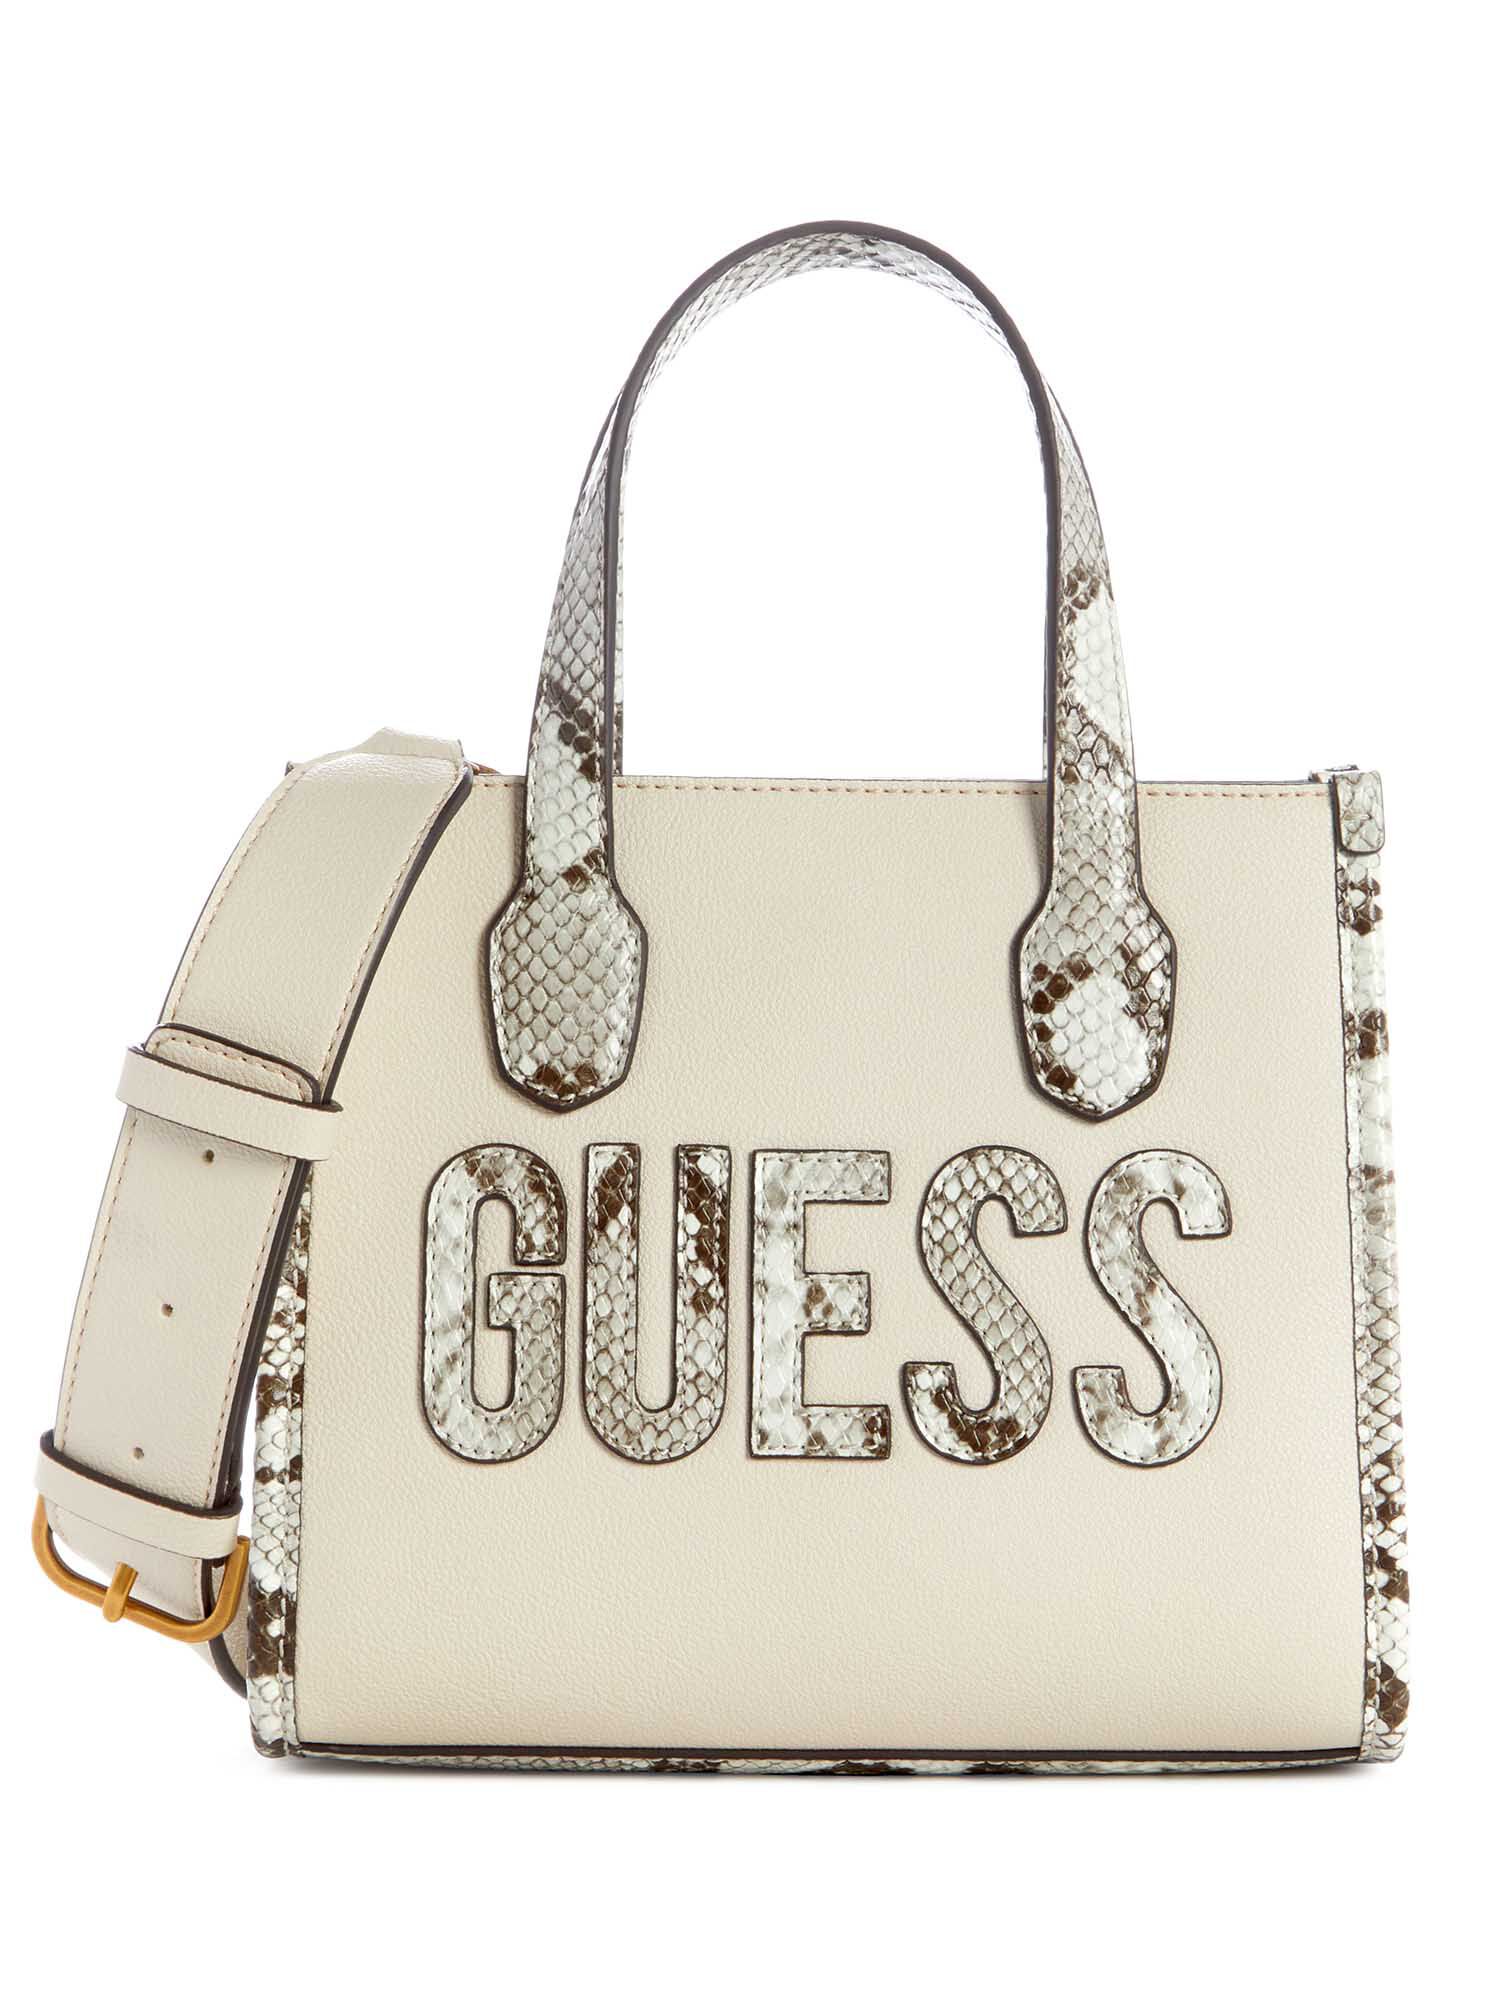 Buy Guess Bags Online @ ZALORA Malaysia & Brunei